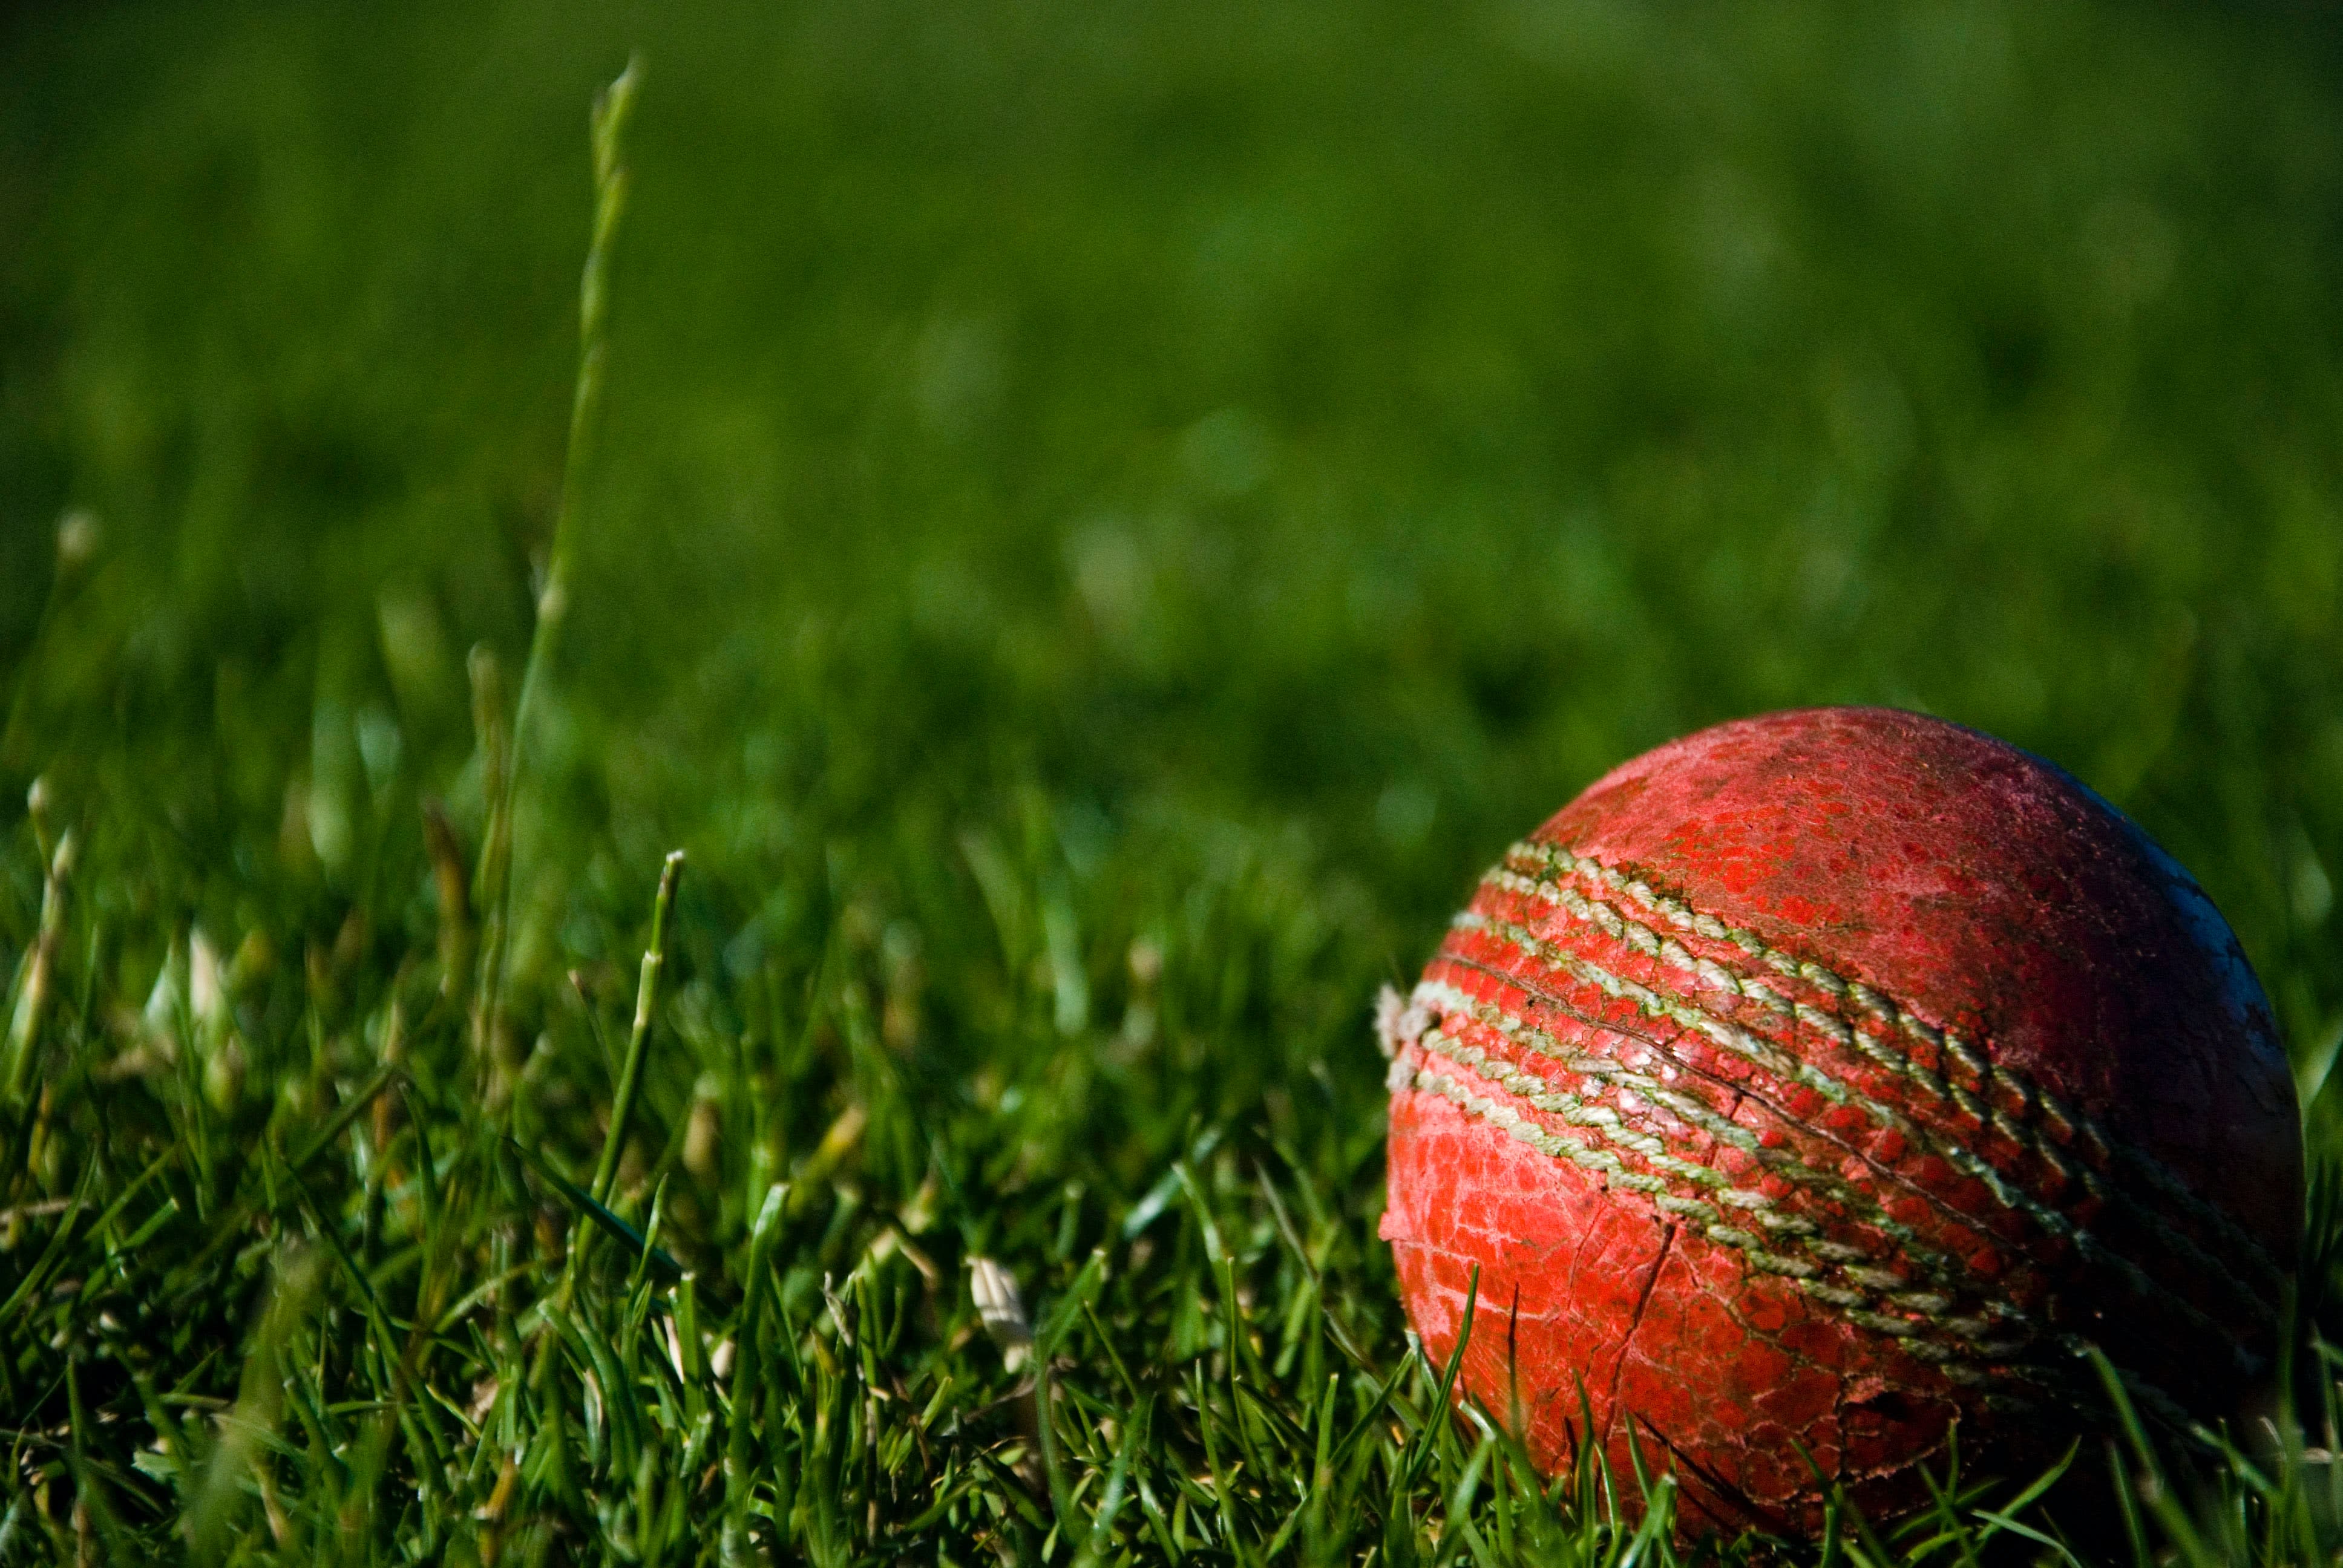 Red cricket ball on grass